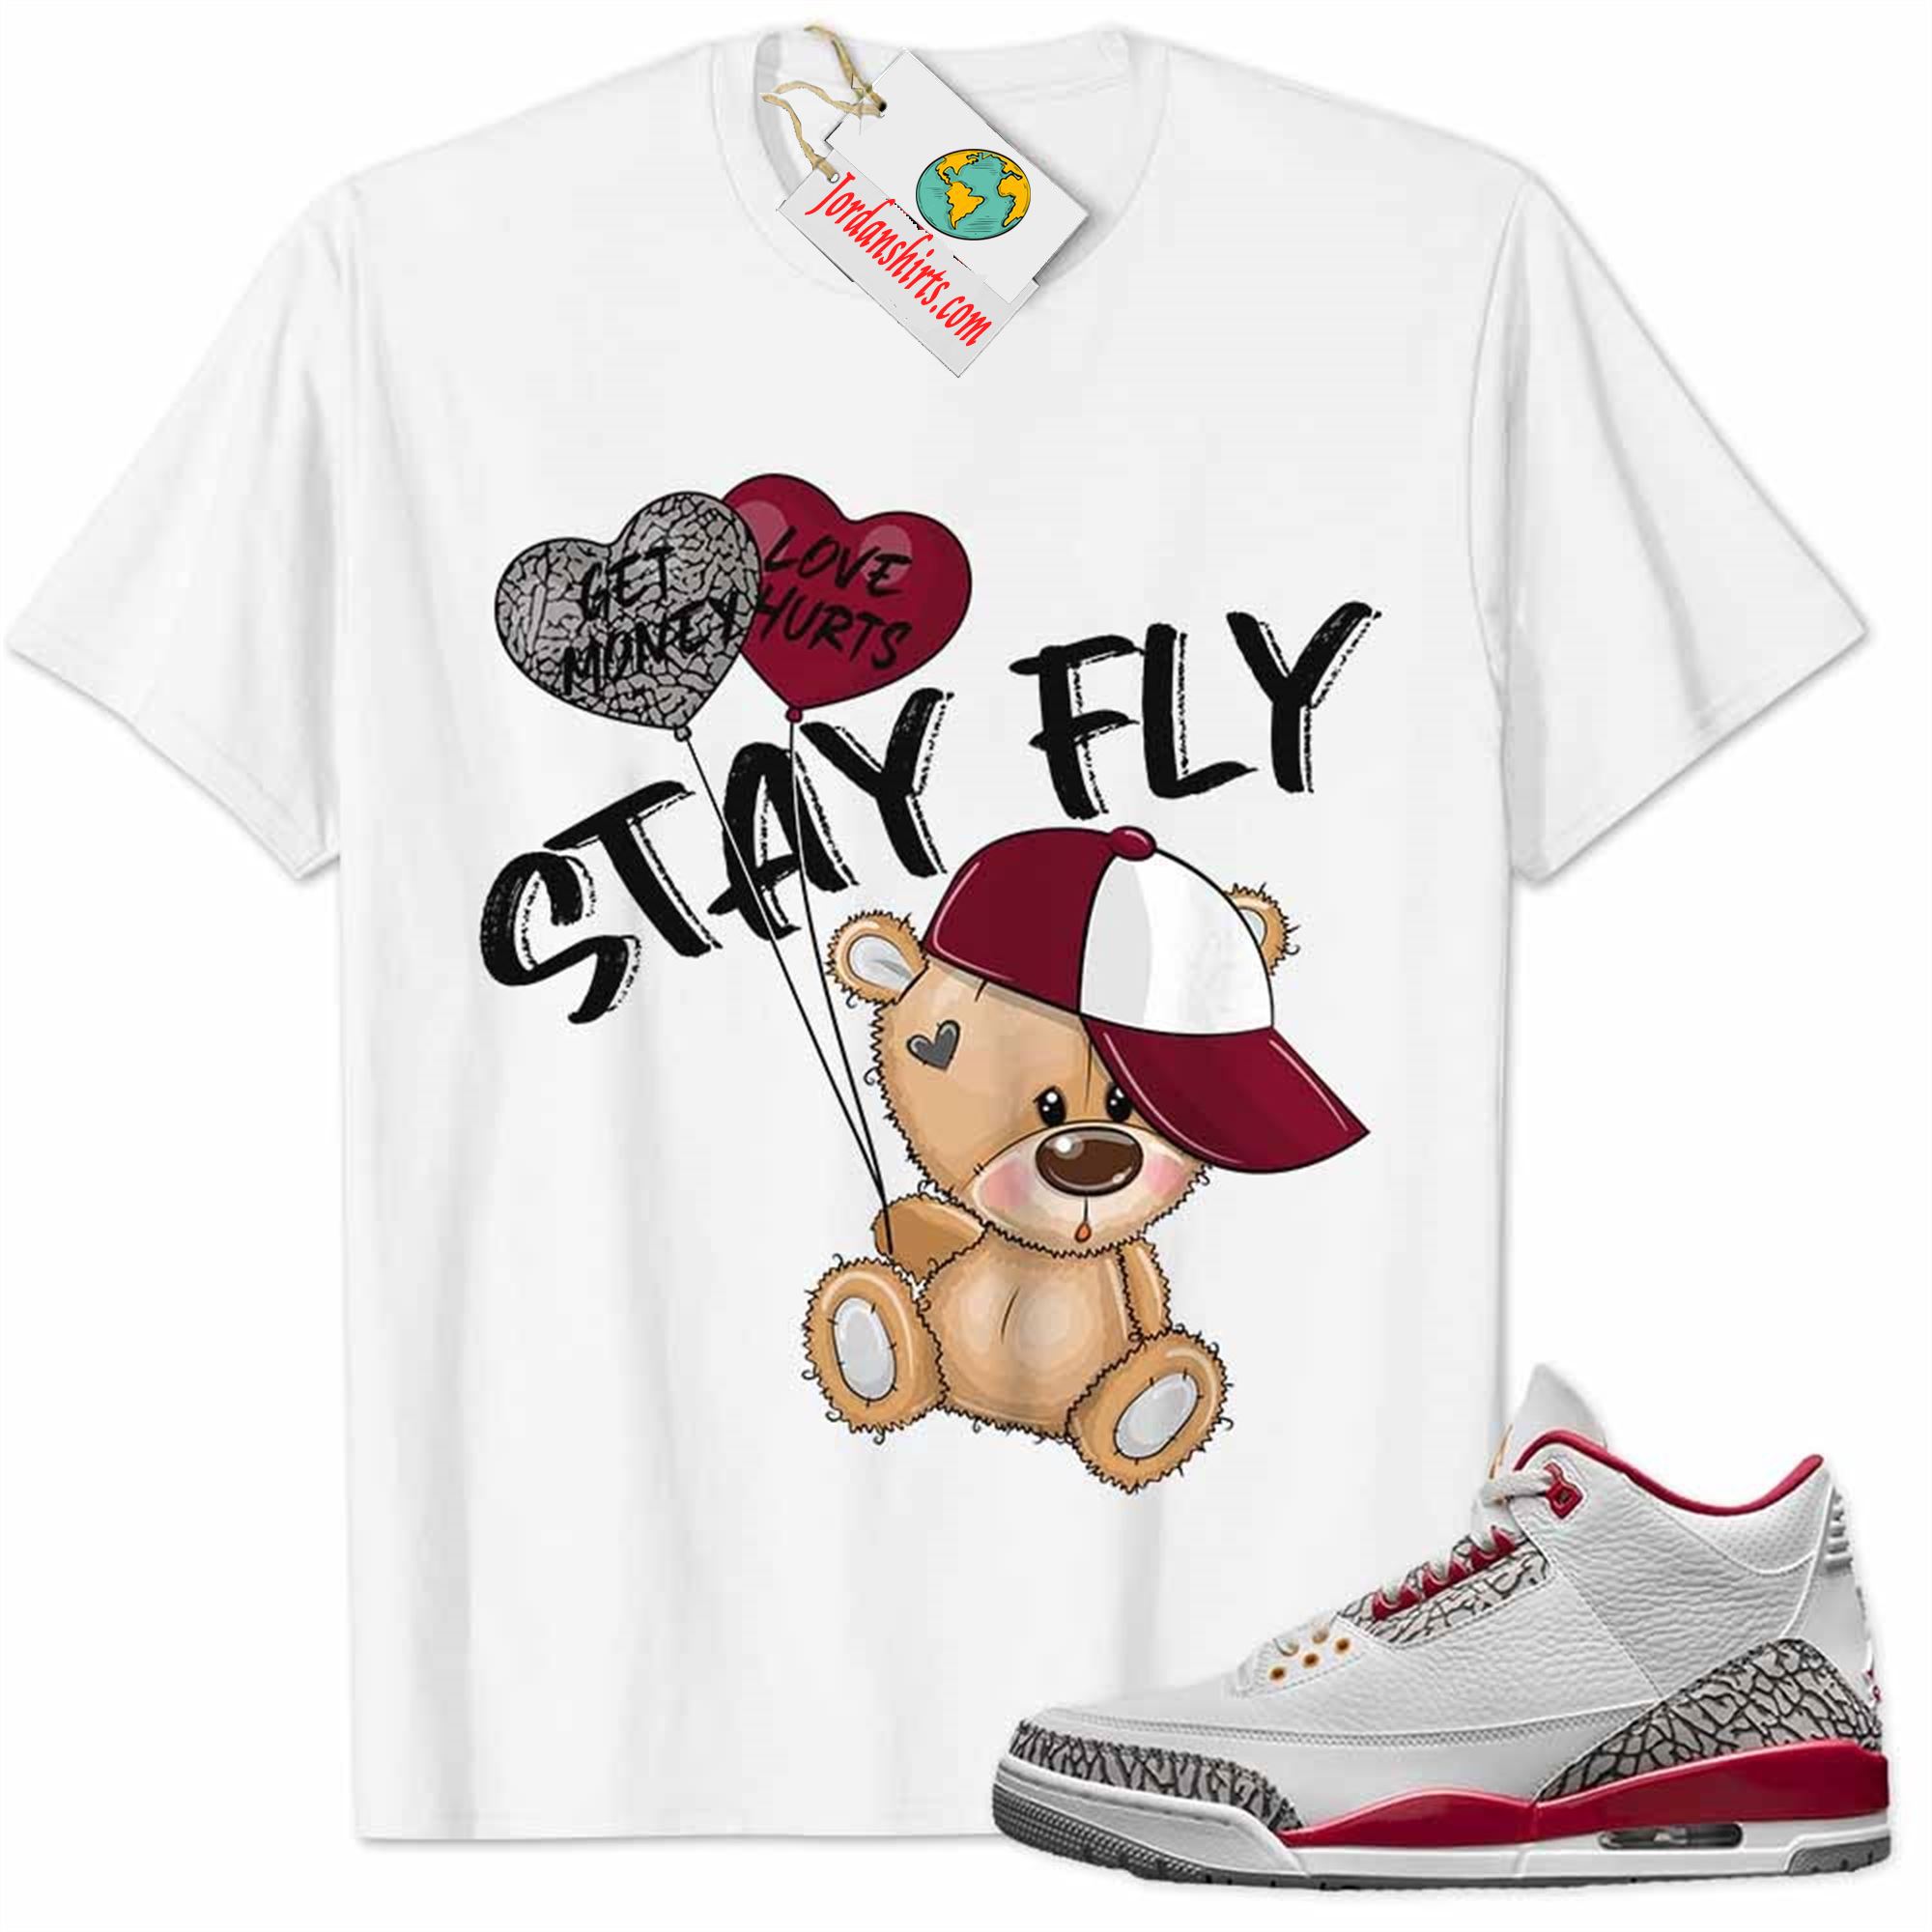 Jordan 3 Shirt, Cardinal Red 3s Shirt Cute Teddy Bear Stay Fly Get Money White Size Up To 5xl